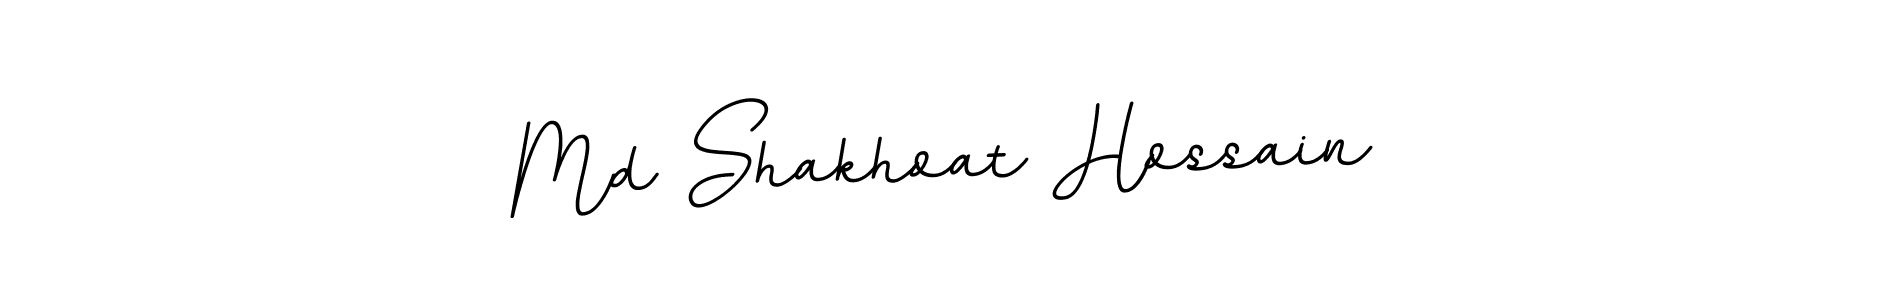 How to Draw Md Shakhoat Hossain signature style? BallpointsItalic-DORy9 is a latest design signature styles for name Md Shakhoat Hossain. Md Shakhoat Hossain signature style 11 images and pictures png